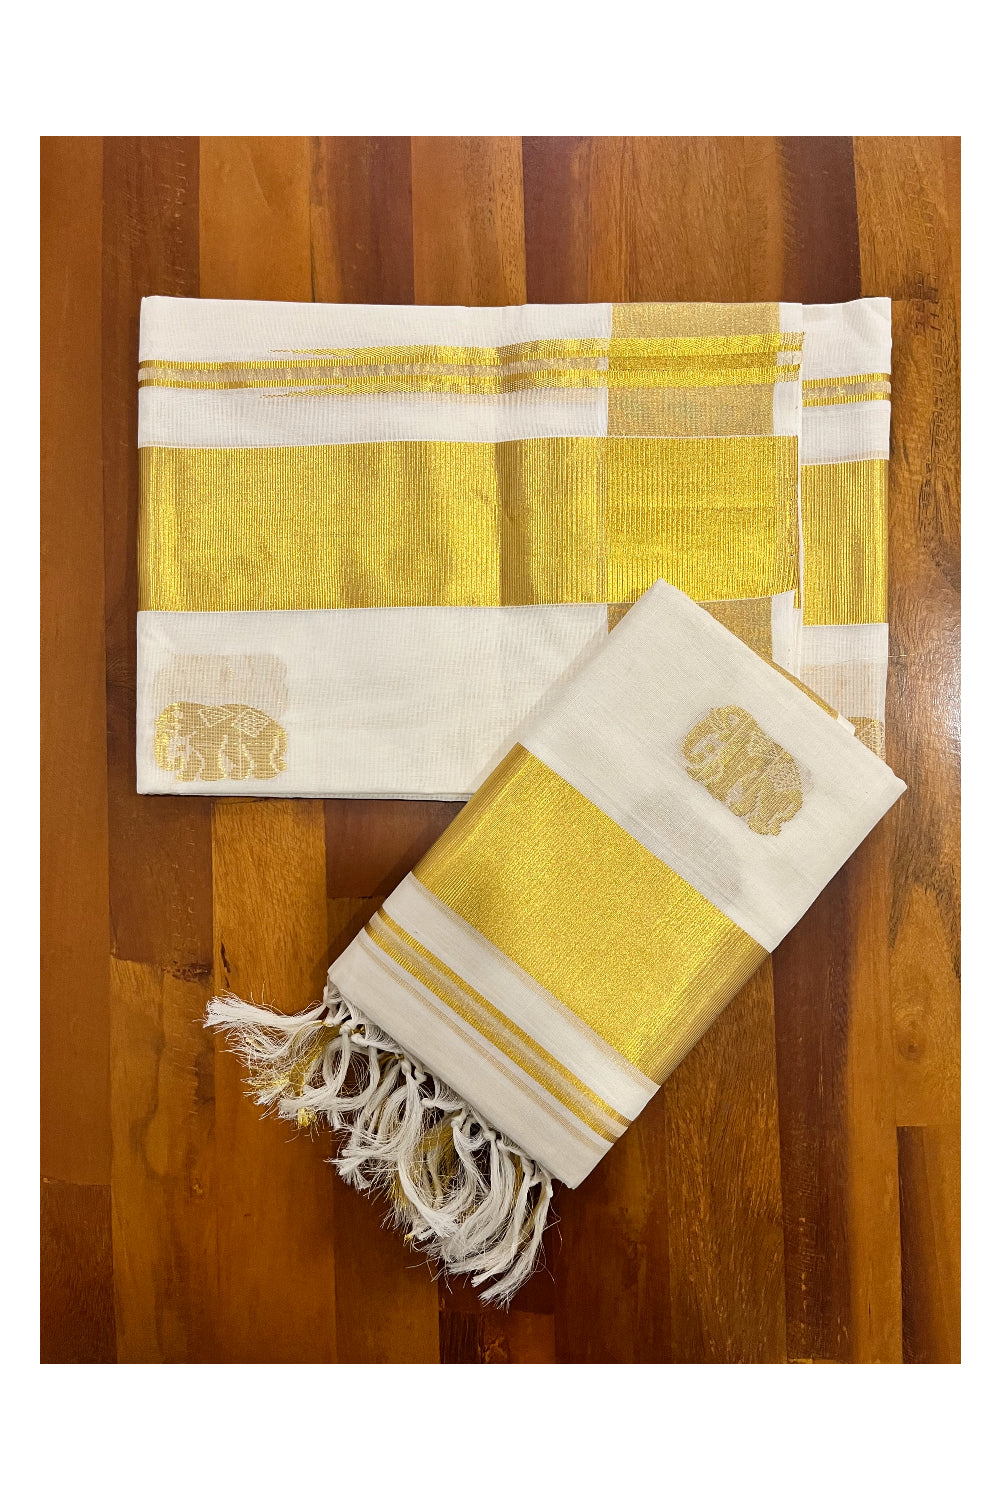 Southloom Handloom Premium Pure Cotton Kasavu Set Mundu (Mundum Neriyathum) with Elephant Woven Designs